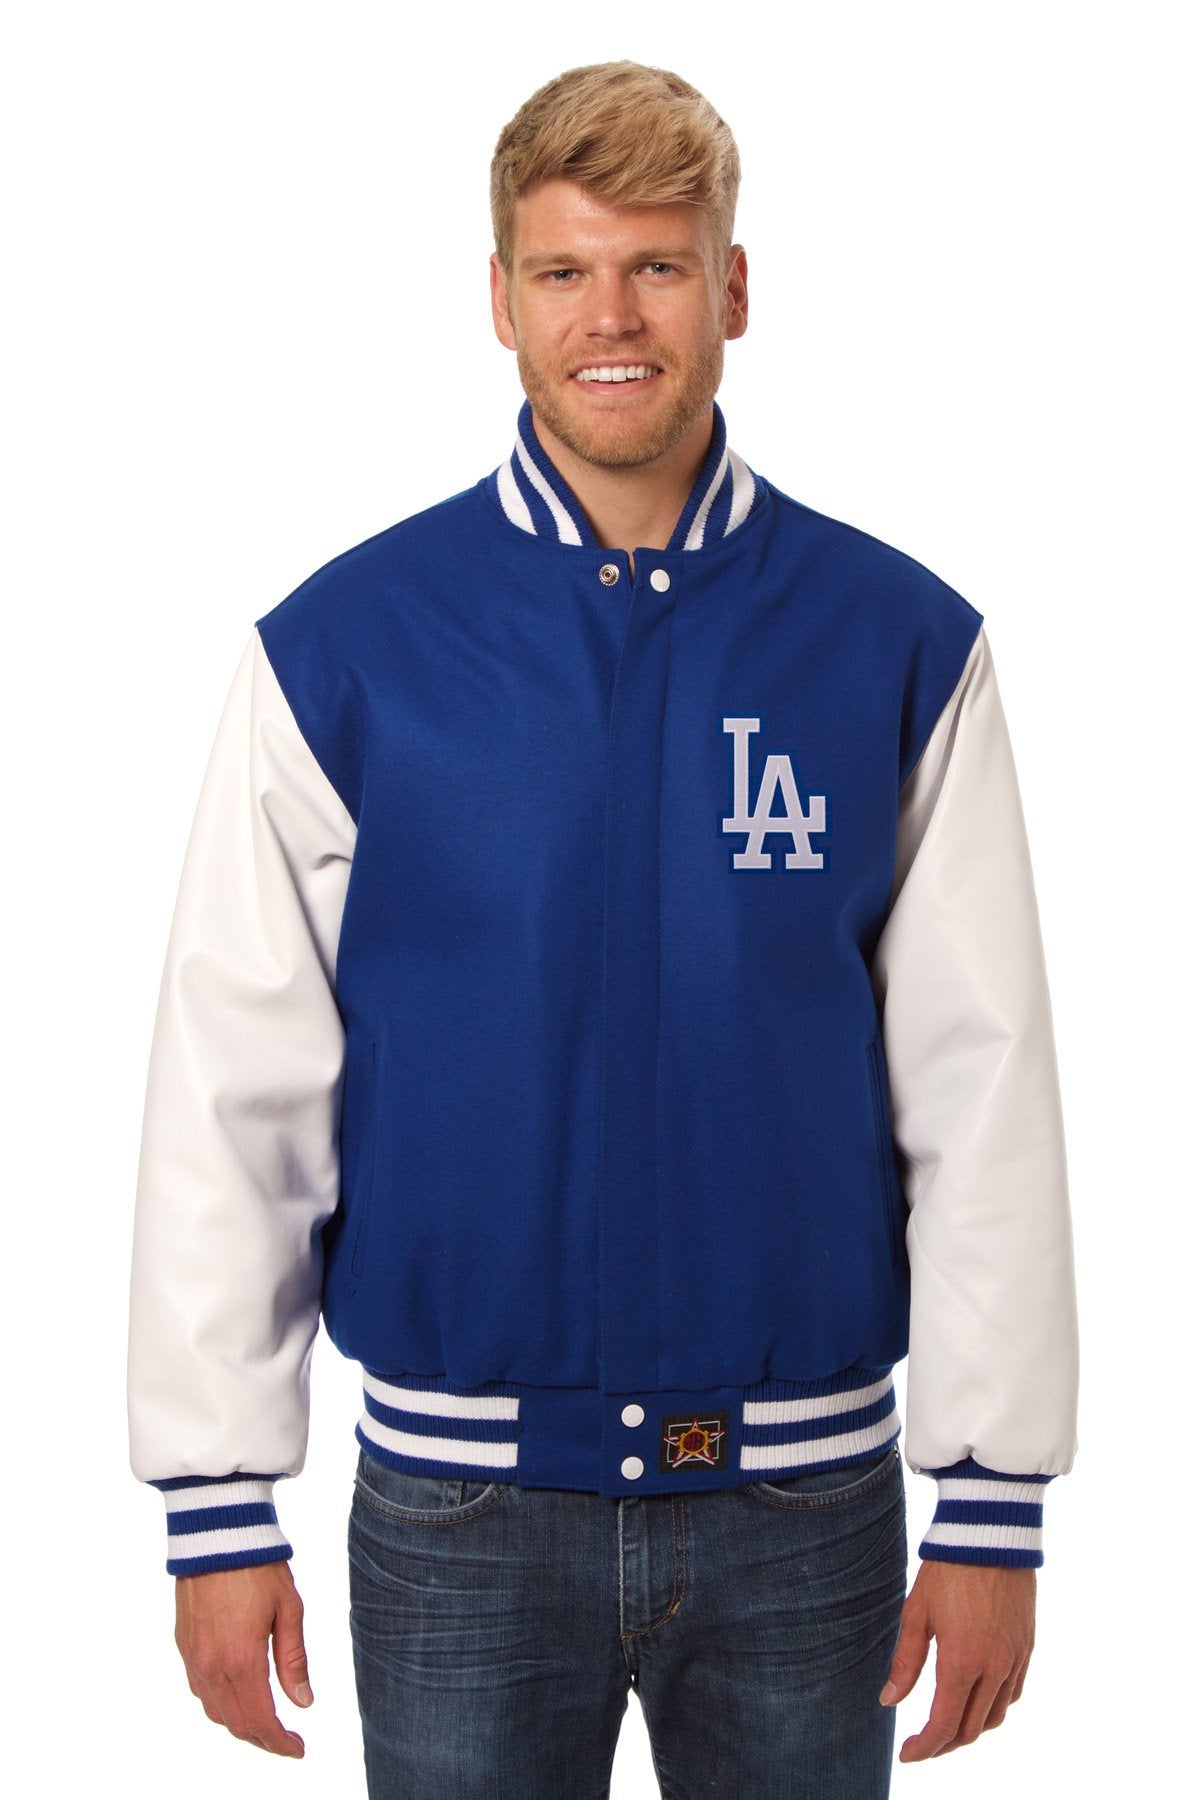 Authentic JH Design Dodgers Wool Jacket